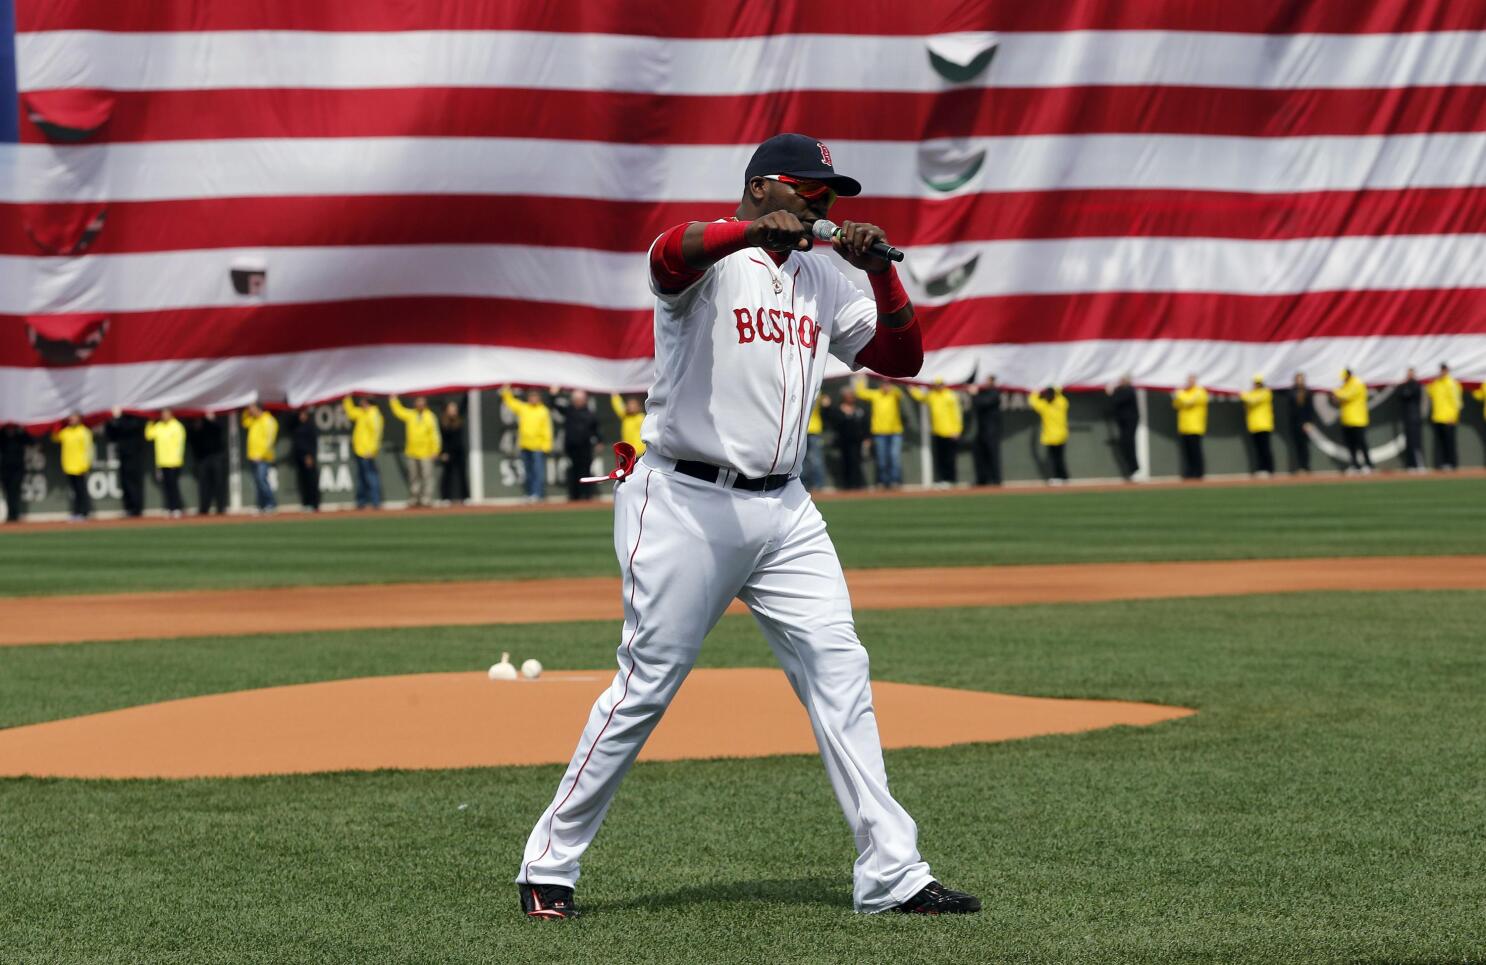 Ortiz reflects on speech given after Boston Marathon bombing – KGET 17